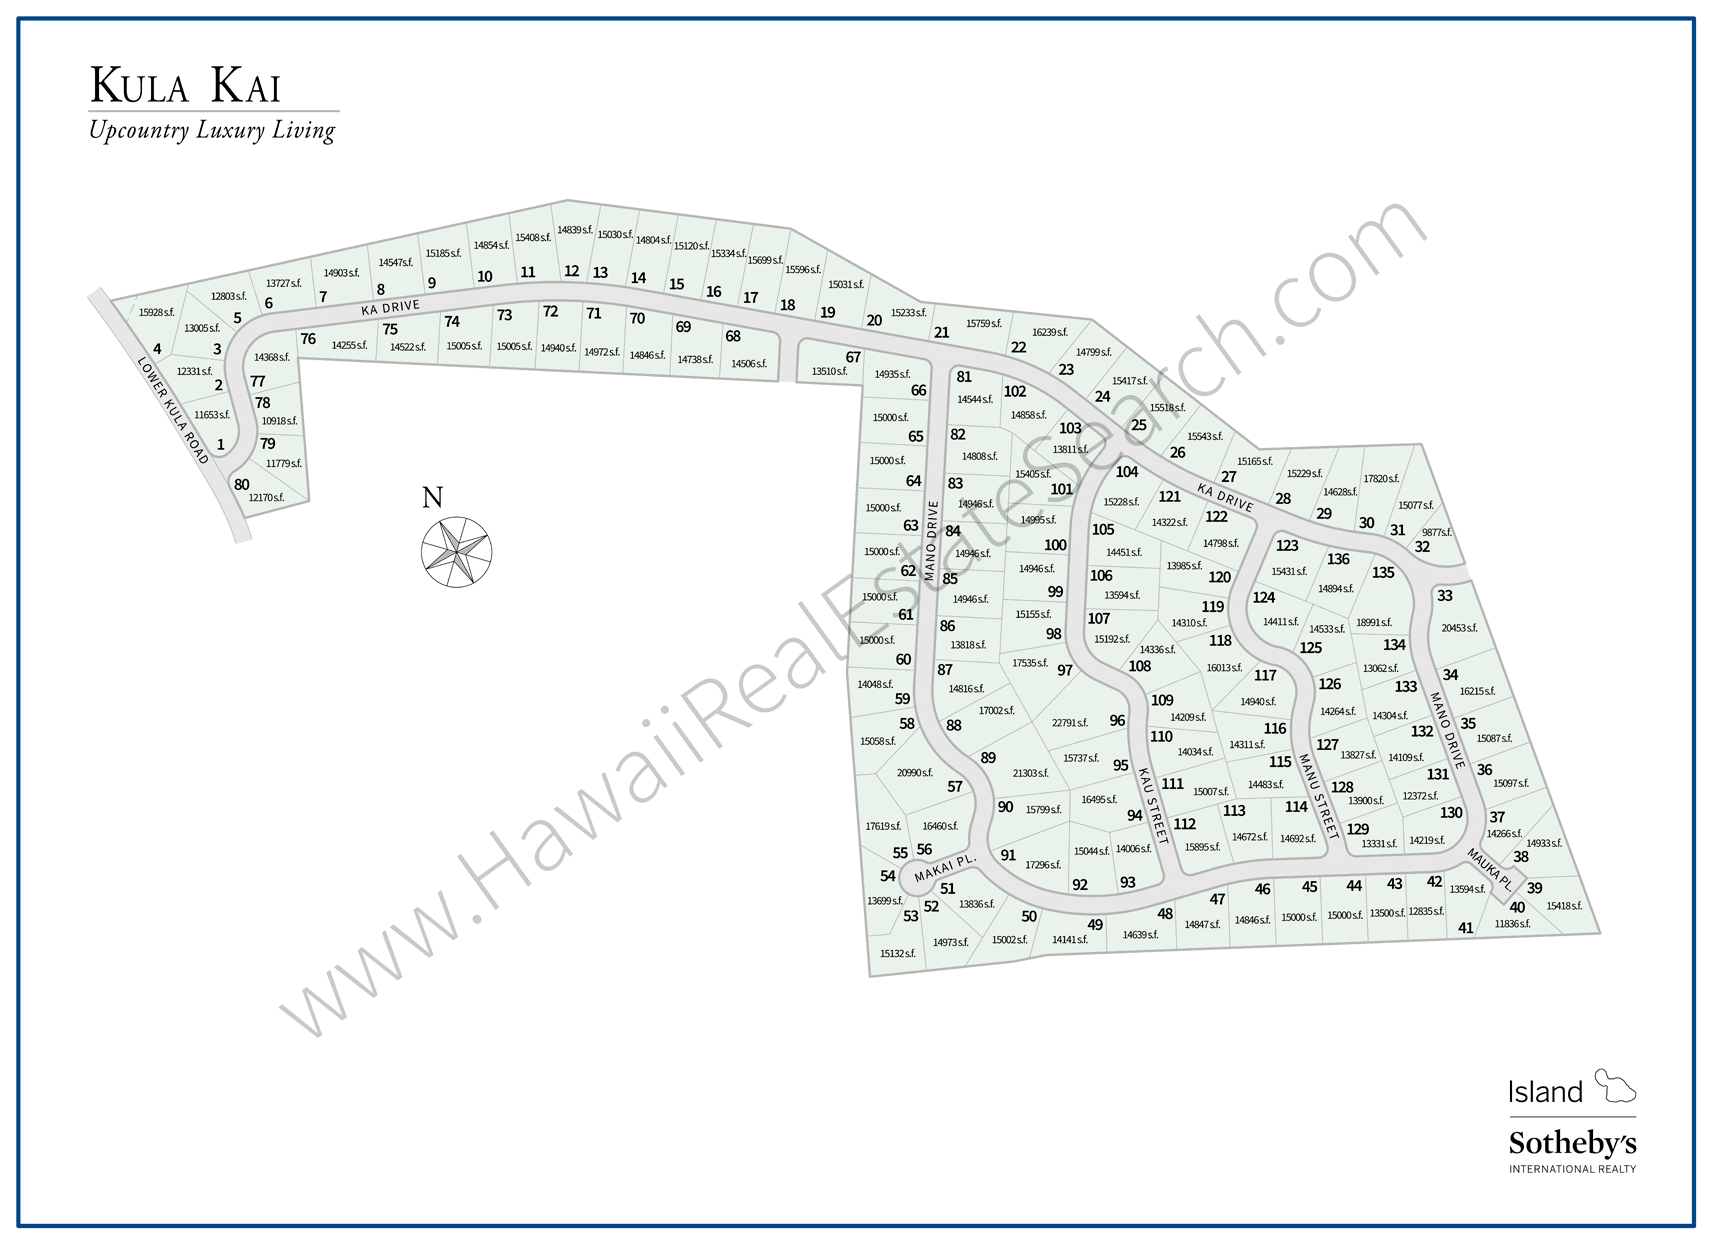 Kula Kai Map 2019